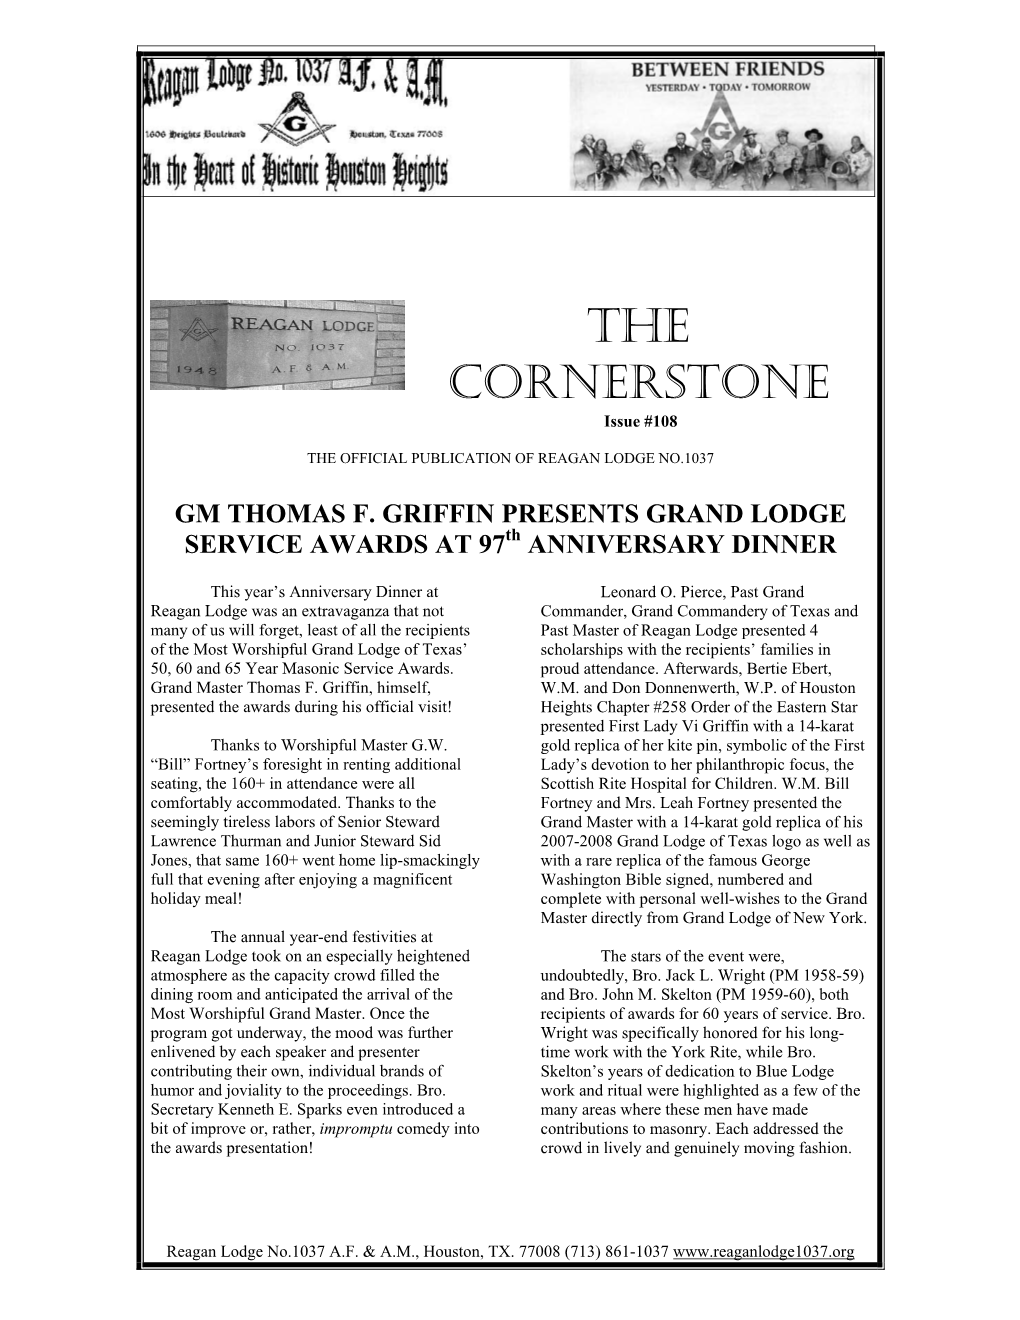 THE CORNERSTONE Issue #108